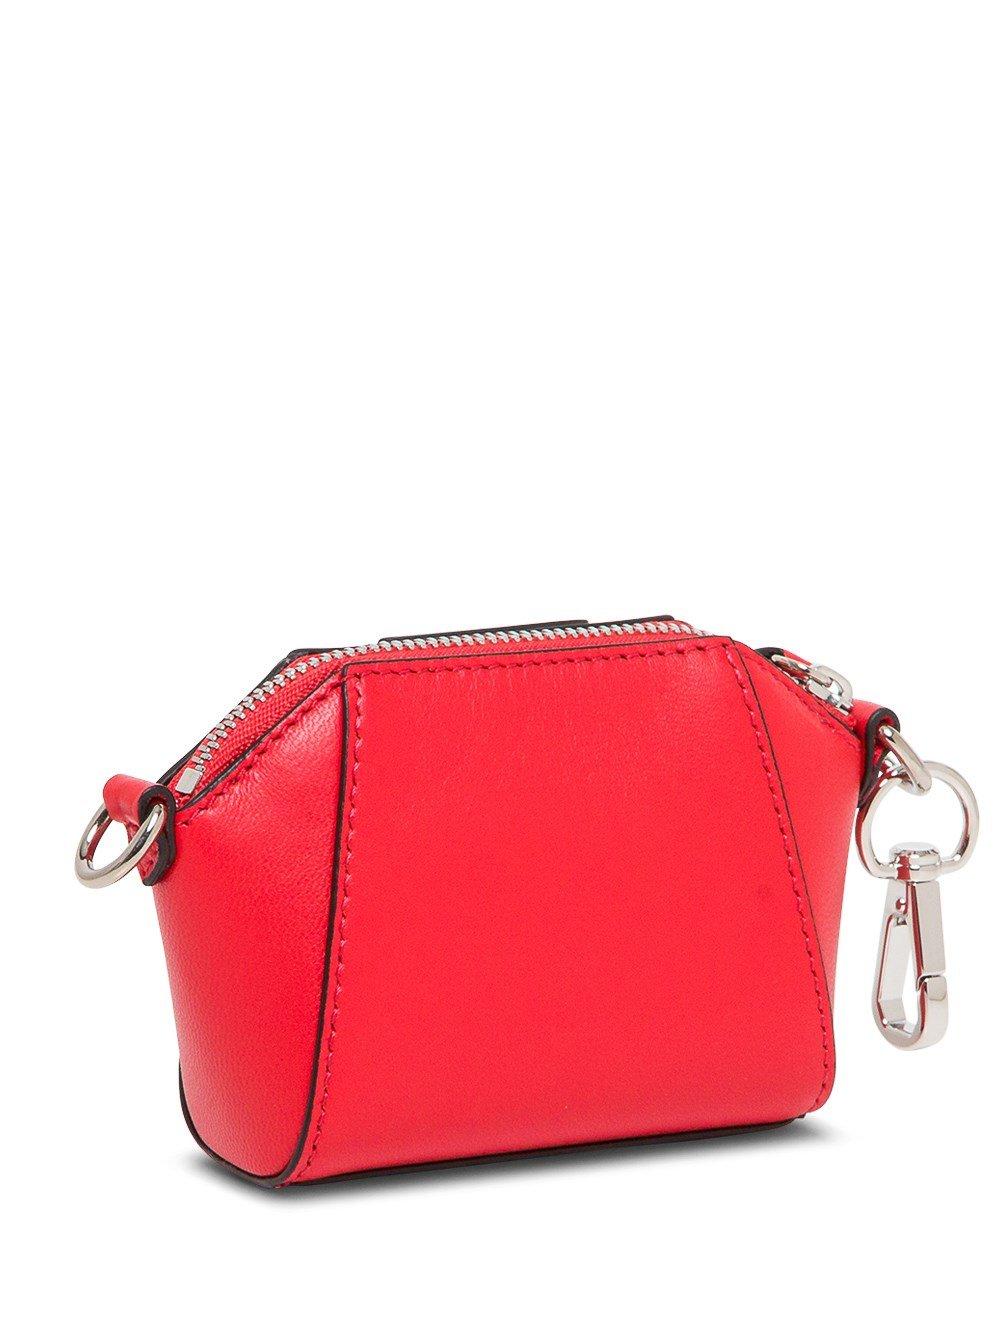 Givenchy Leather Baby Antigona Crossbody Bag in Red | Lyst